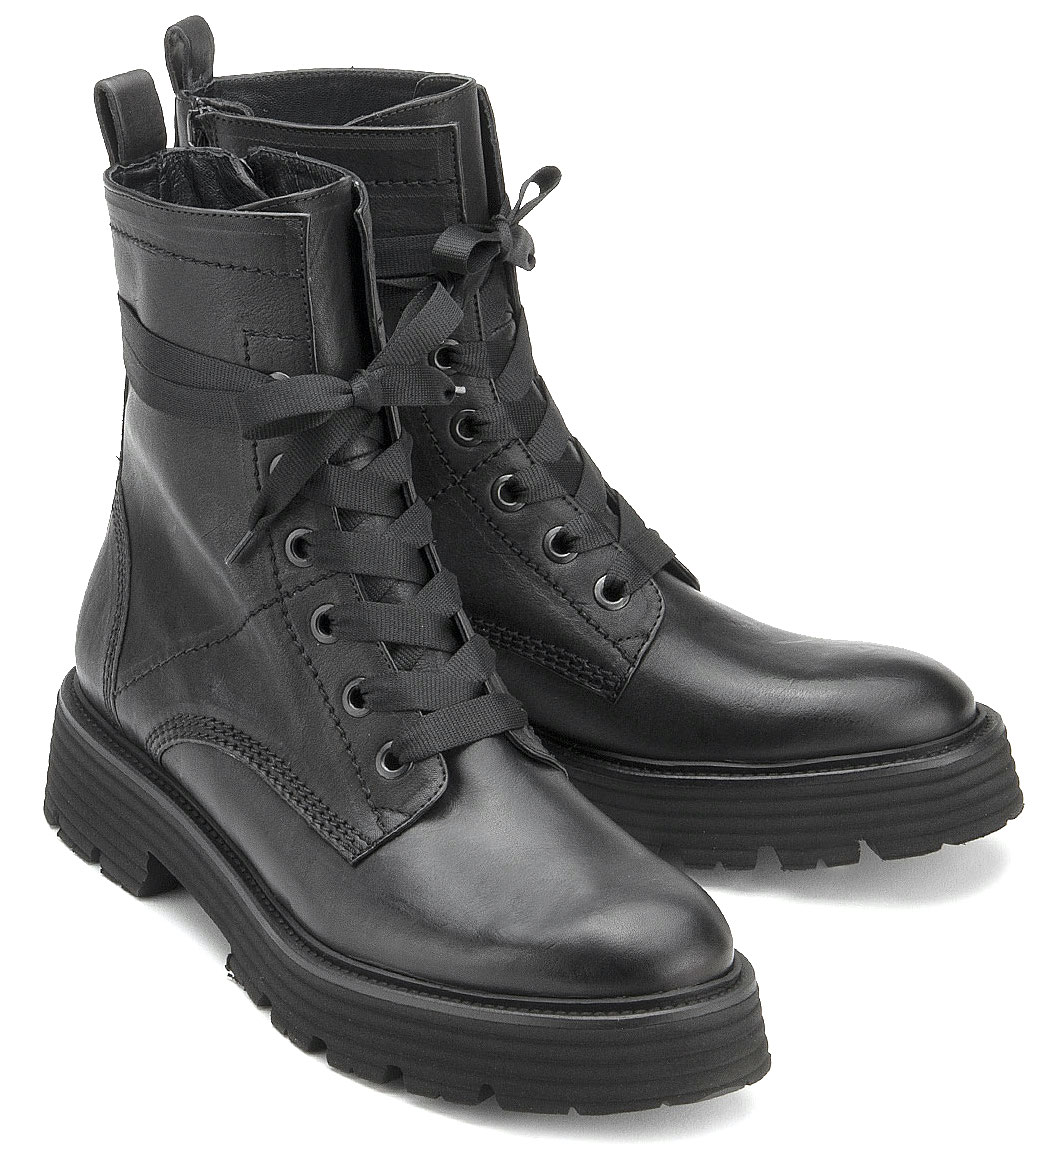 vest Glat influenza Kennel & Schmenger lace-up boots in plus sizes: 5835-20 300001249408| HORSCH